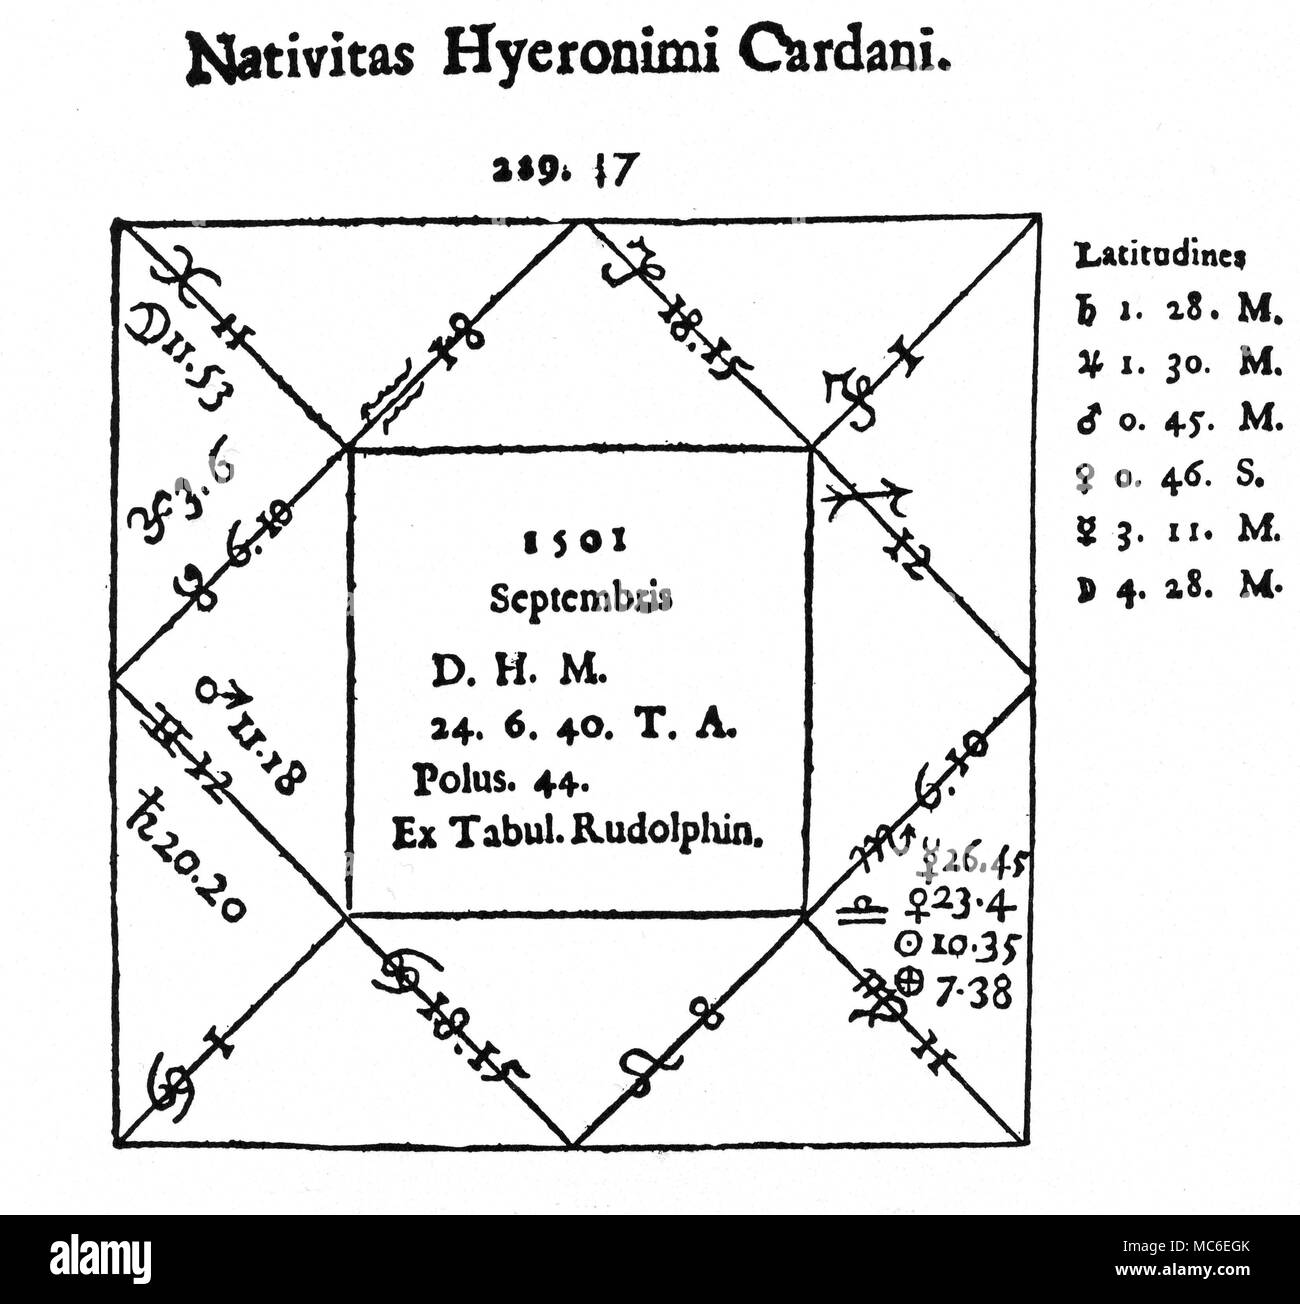 Horoskope - kardan Horoskop Der okkultist Hieronymus Cardan, am 24. September 1501 geboren. Von J. B. Morin de Villefranche, Astrolologia Gallica, 1661. Stockfoto